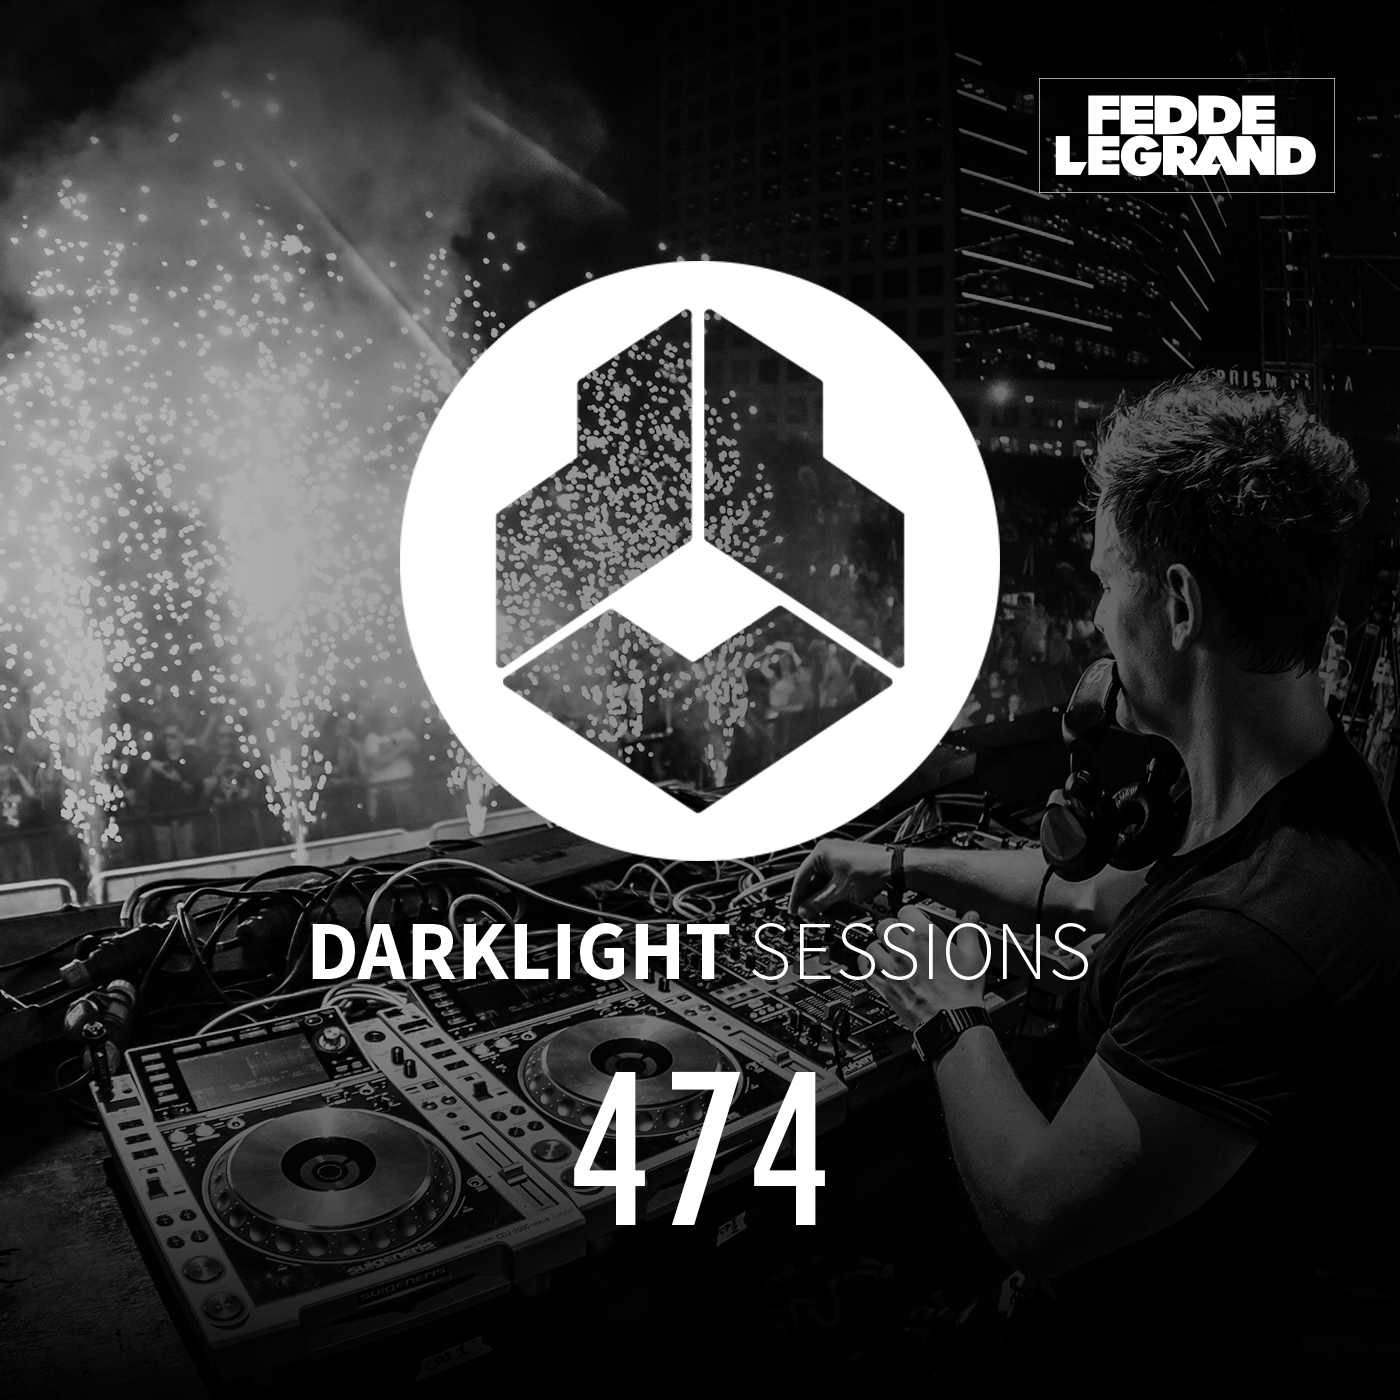 Darklight Sessions 474